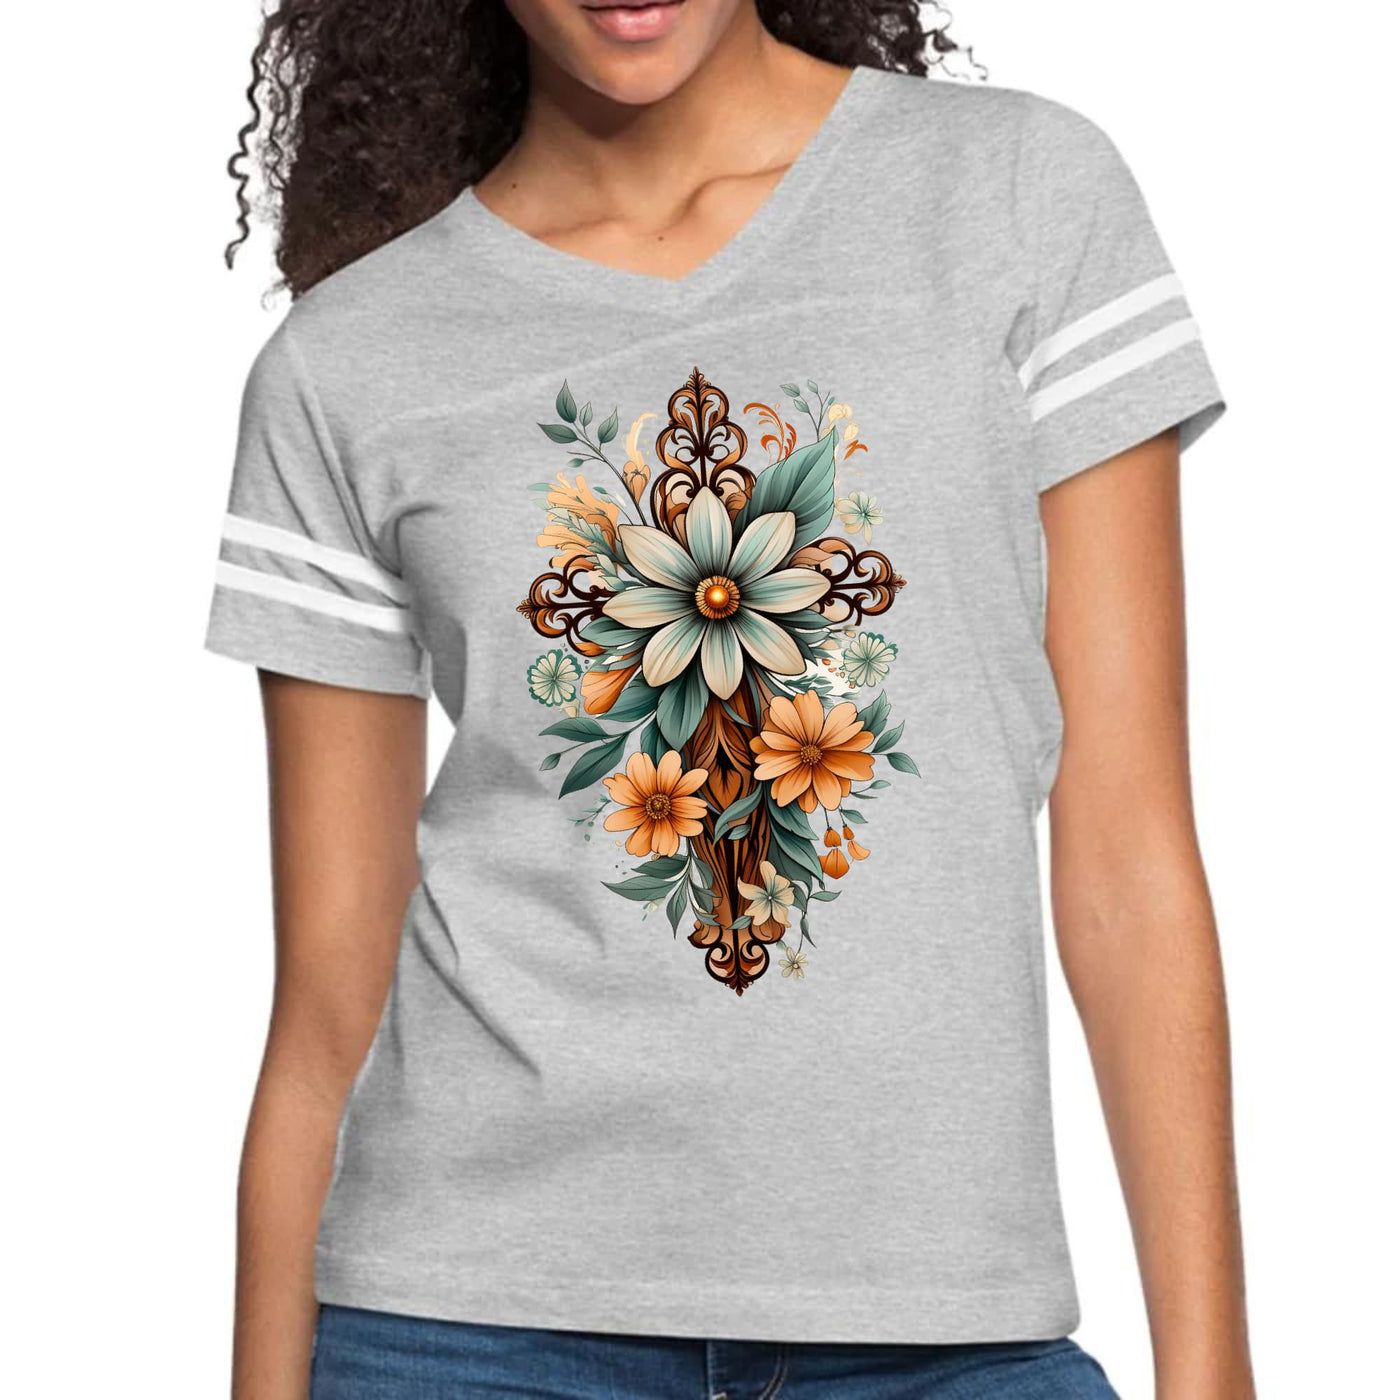 Womens Vintage Sport Graphic T-shirt Christian Cross Floral Bouquet - Womens